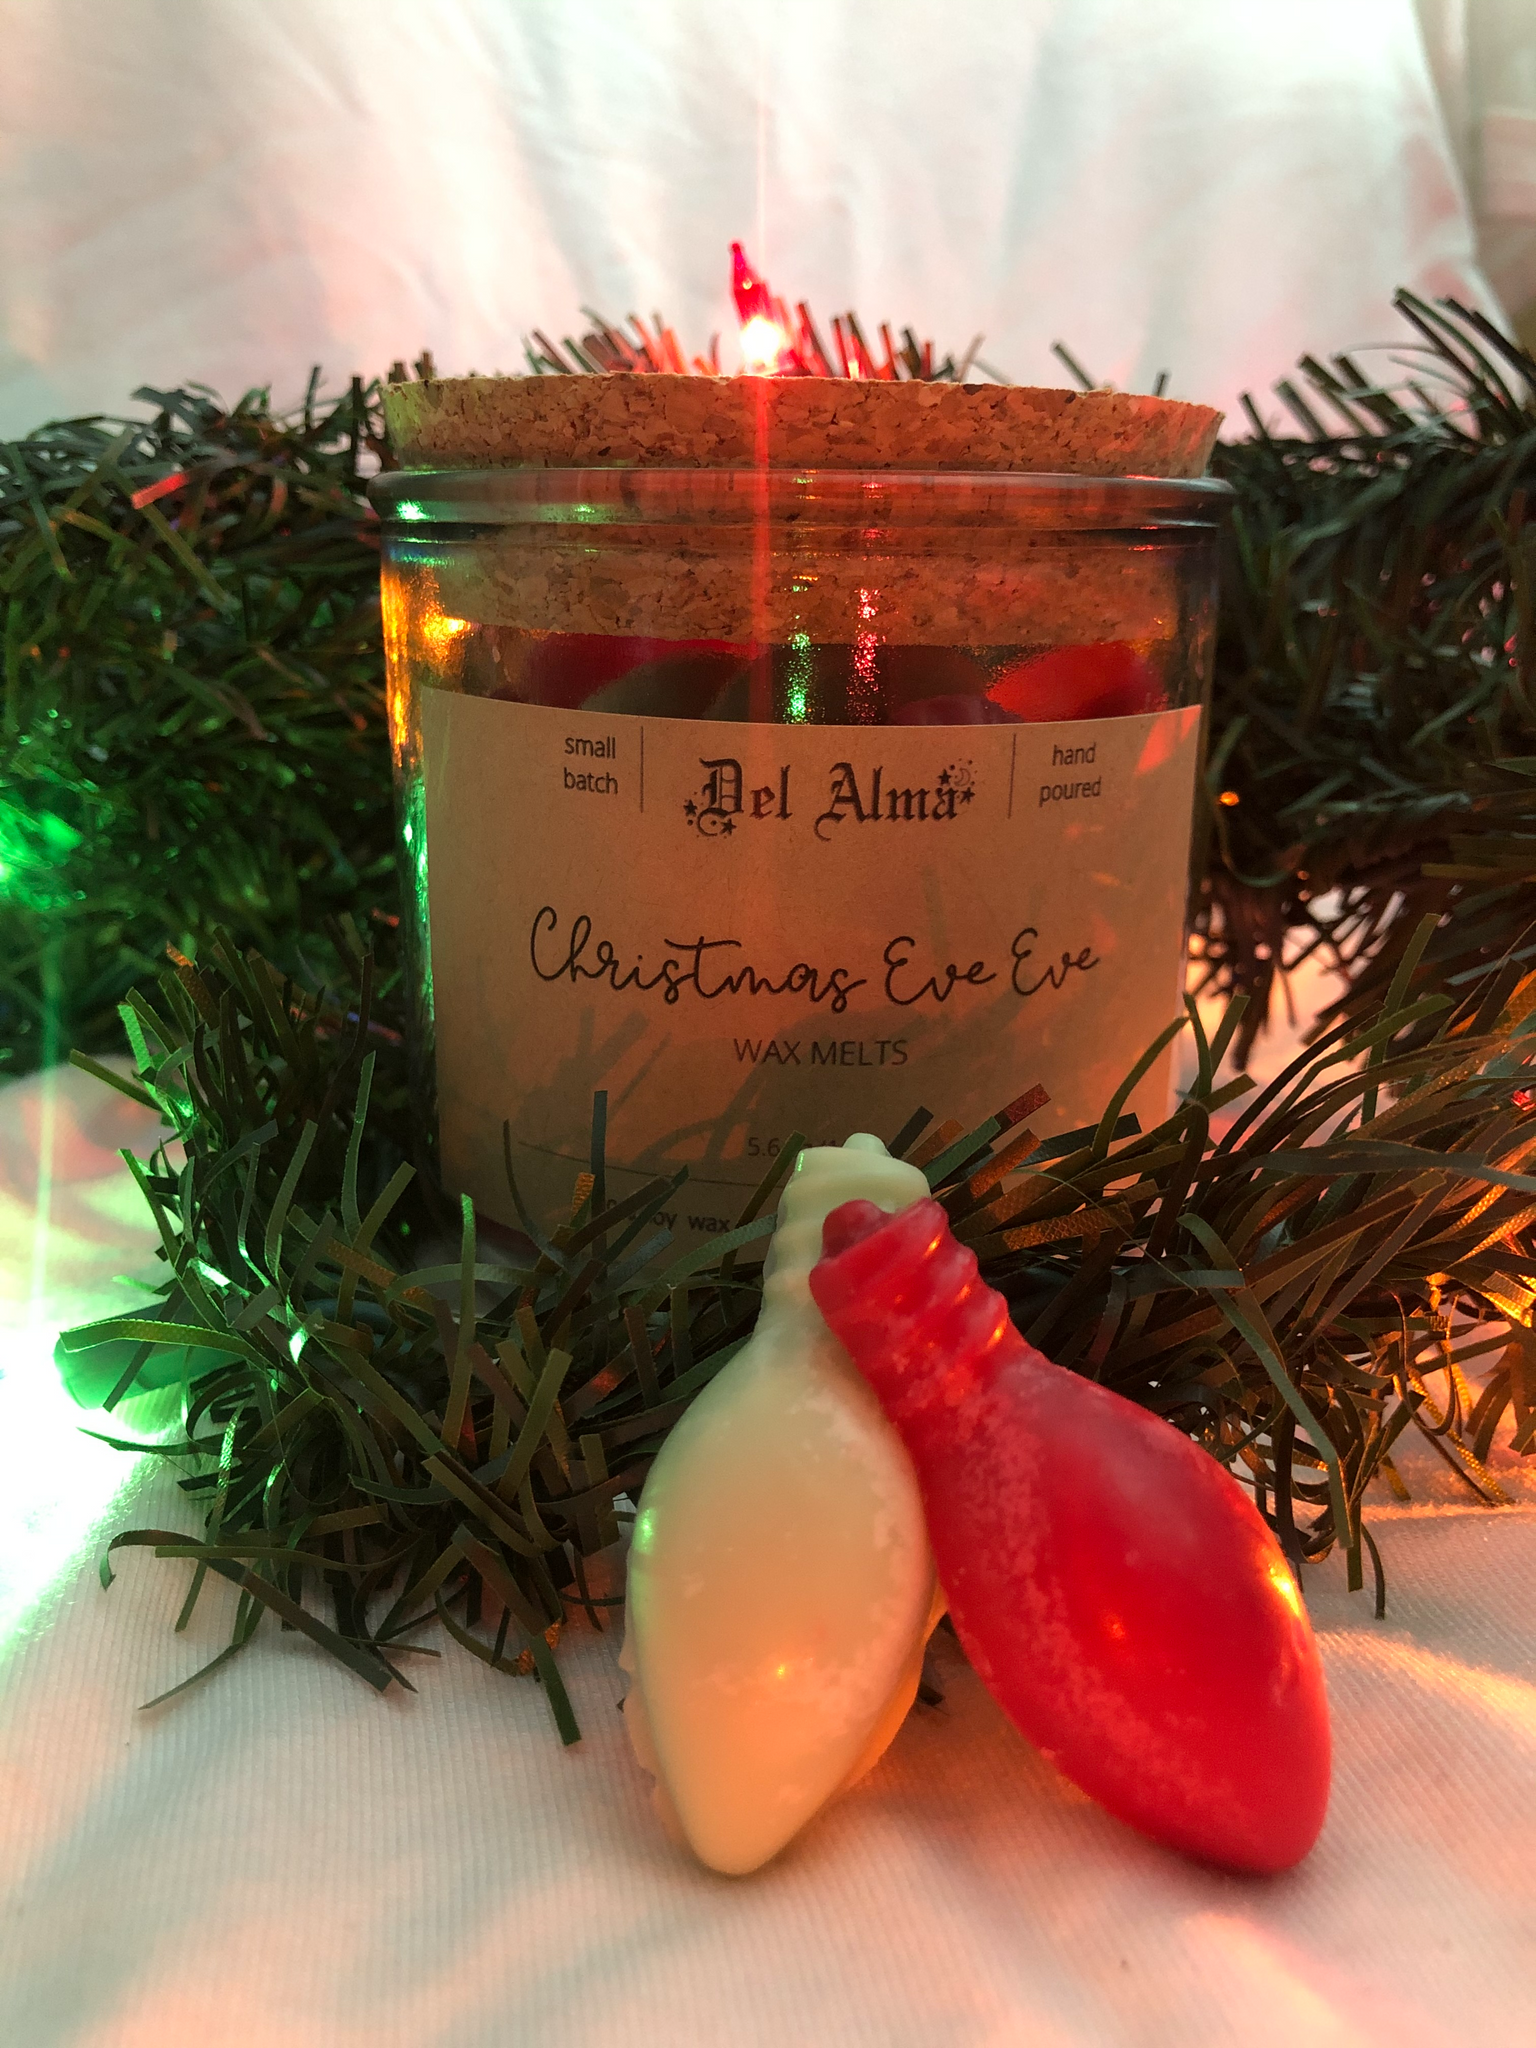 “Christmas Eve Eve” wax melts